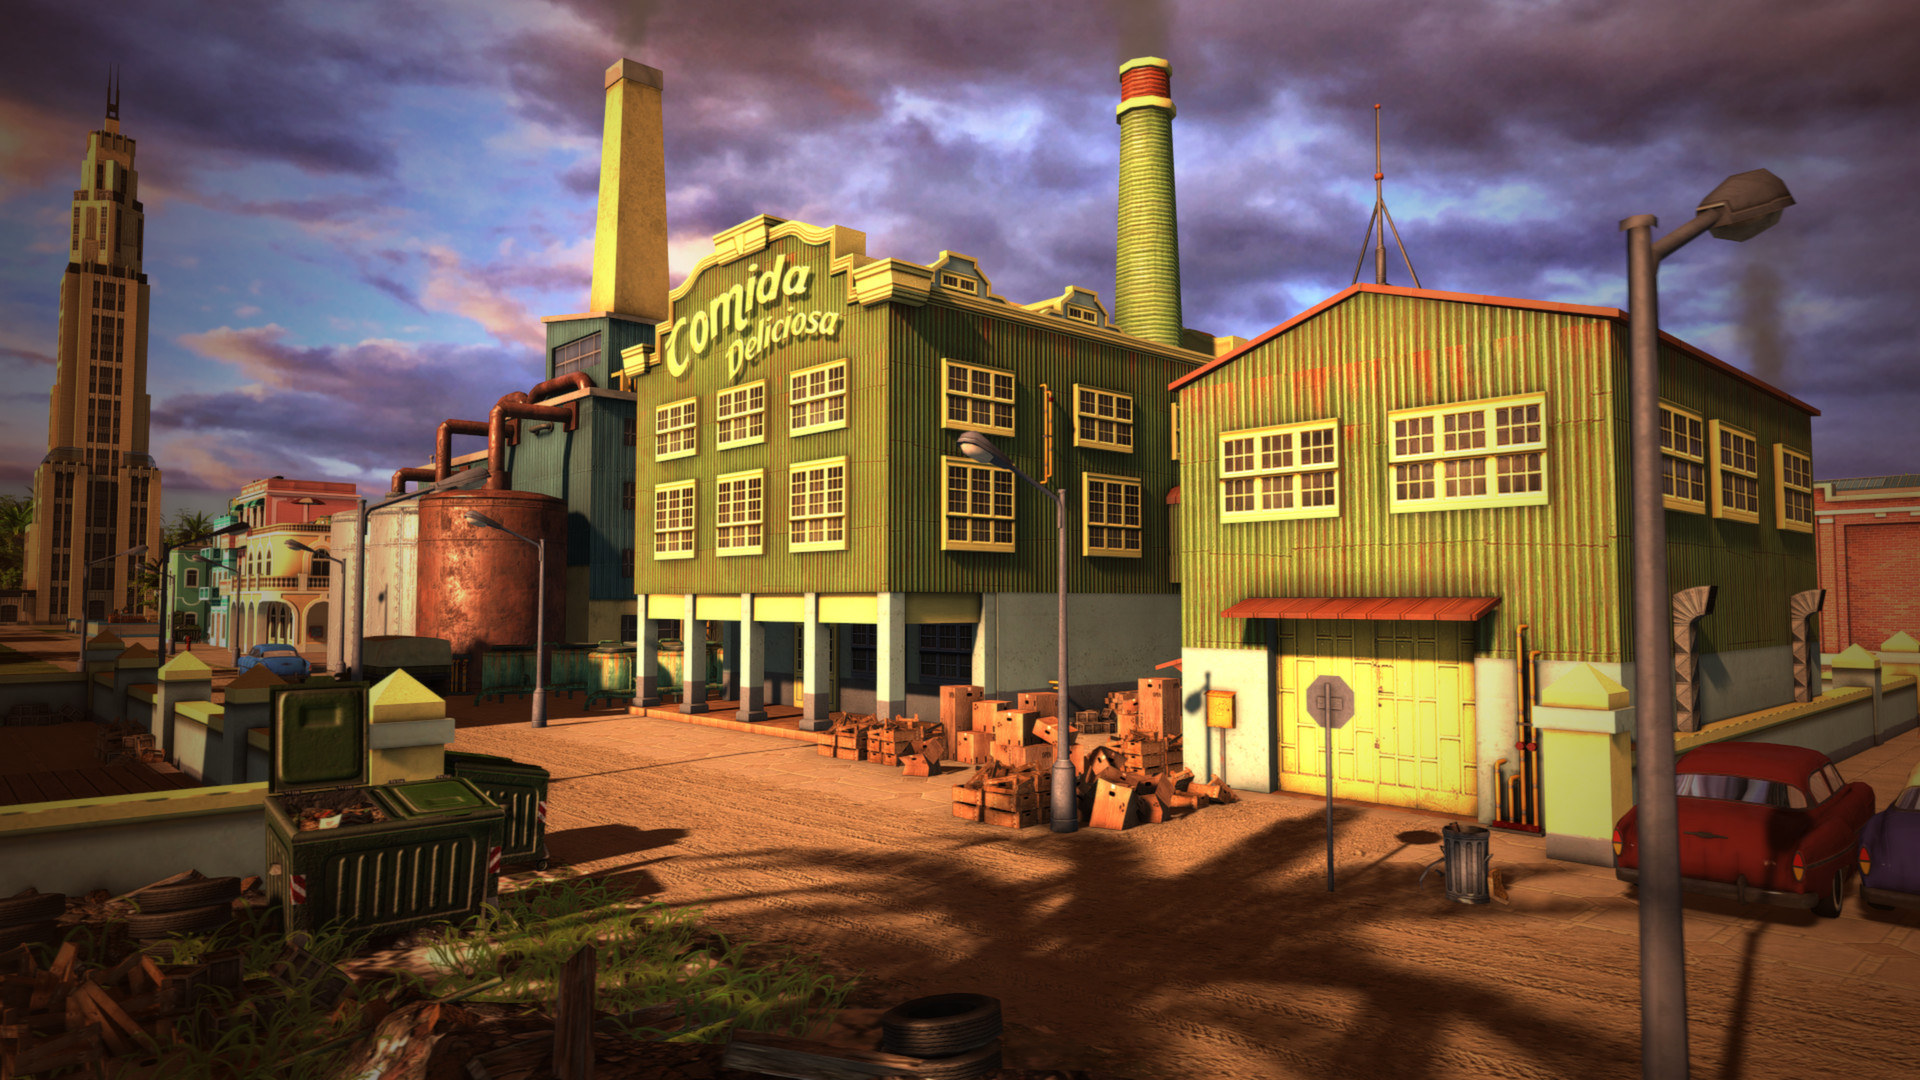 Tropico 5 Resimleri 